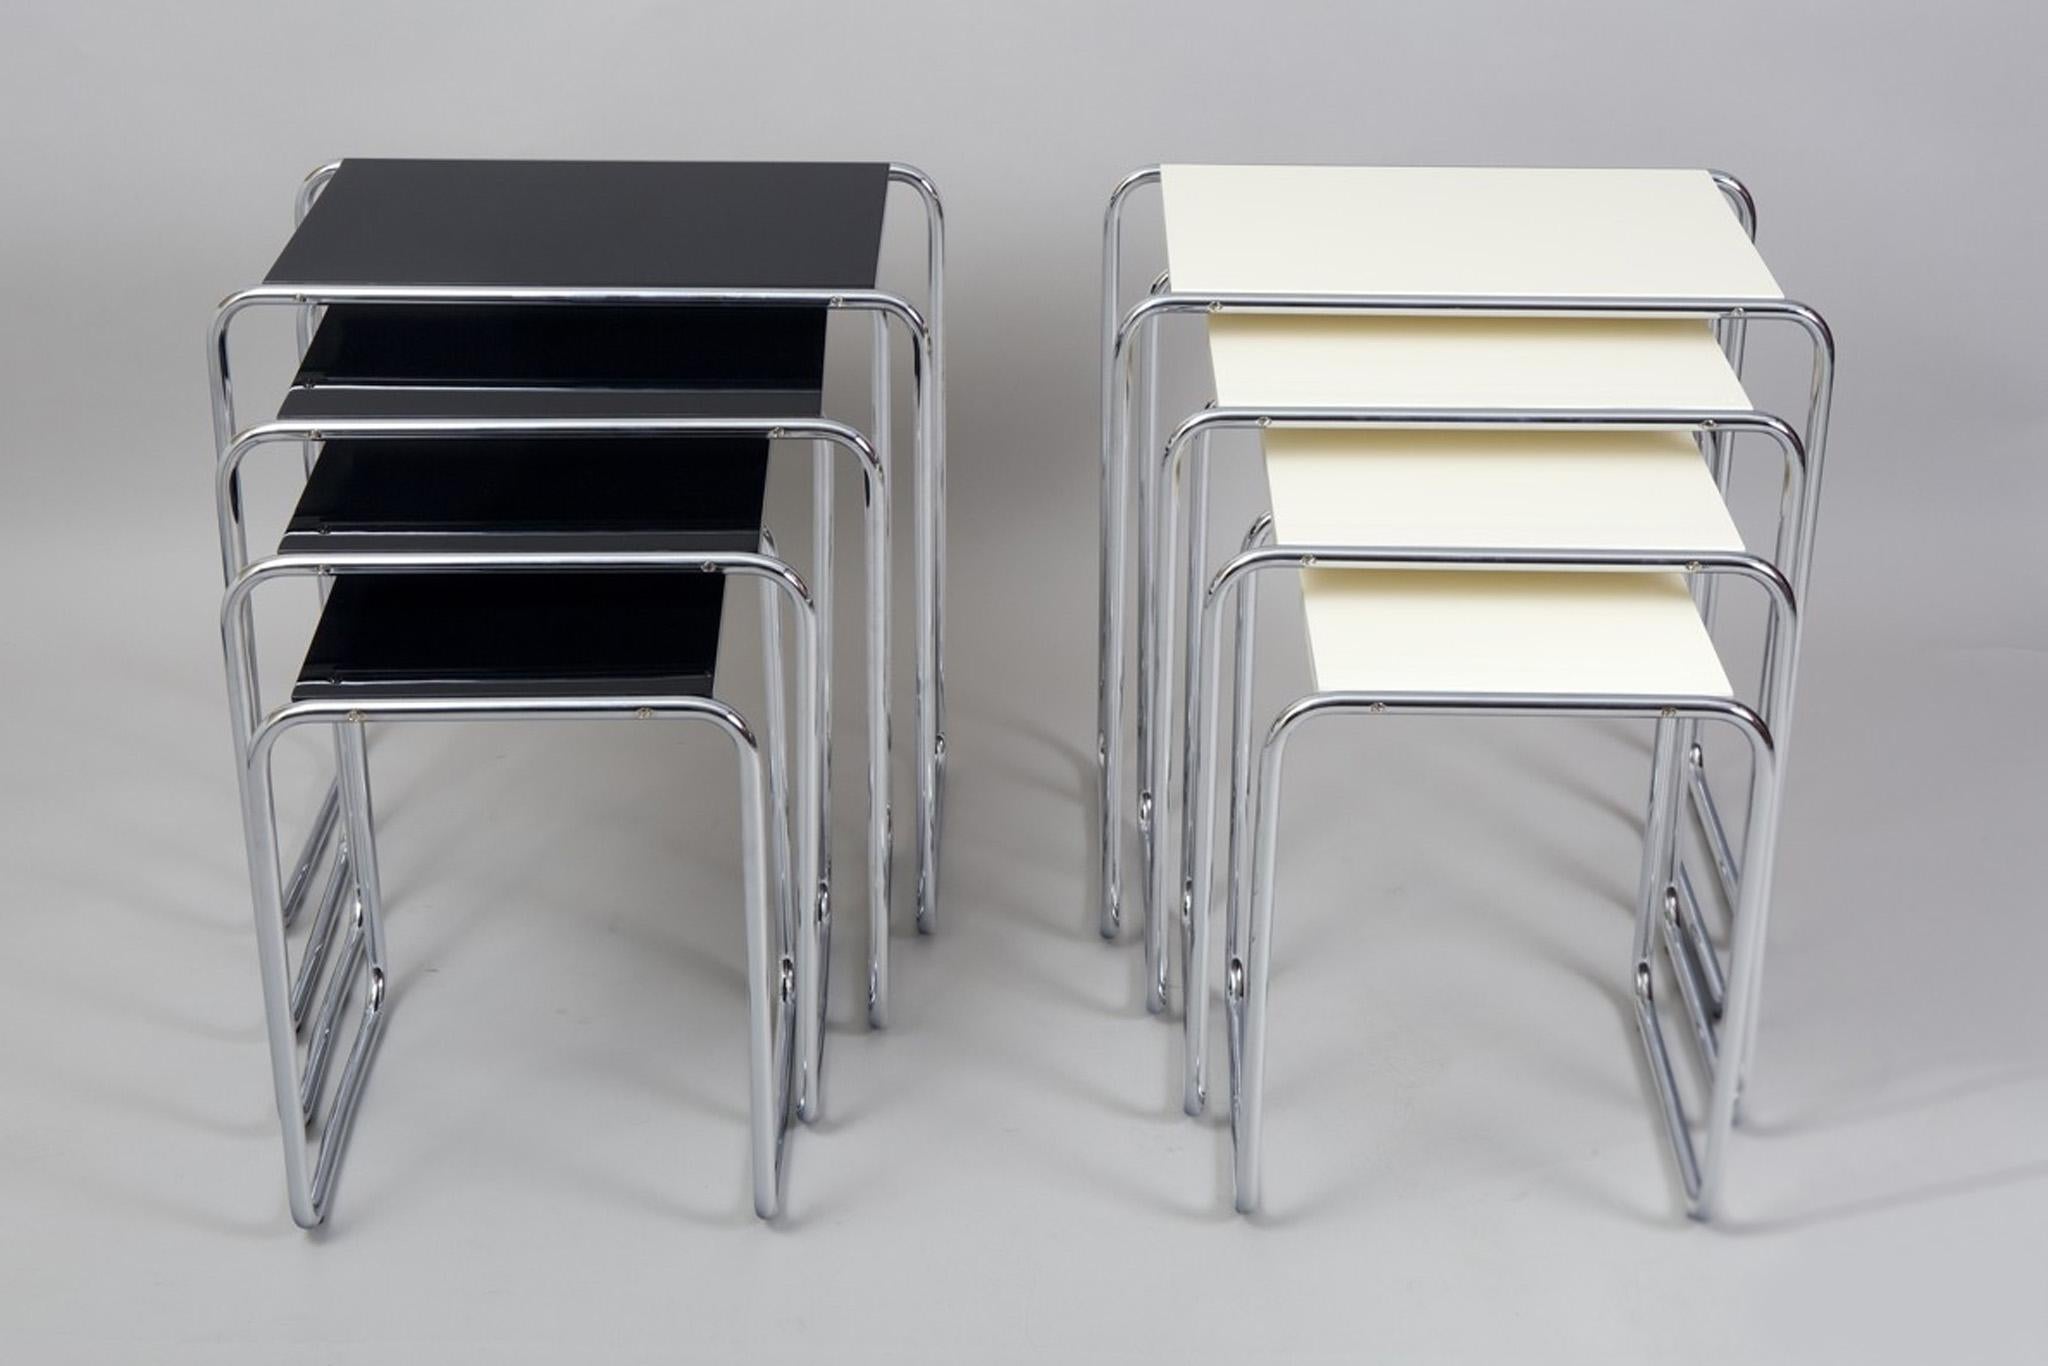 Steel Fully Restored Black Nest Tables Made in the 1950s by Kovona, Czech Origin For Sale